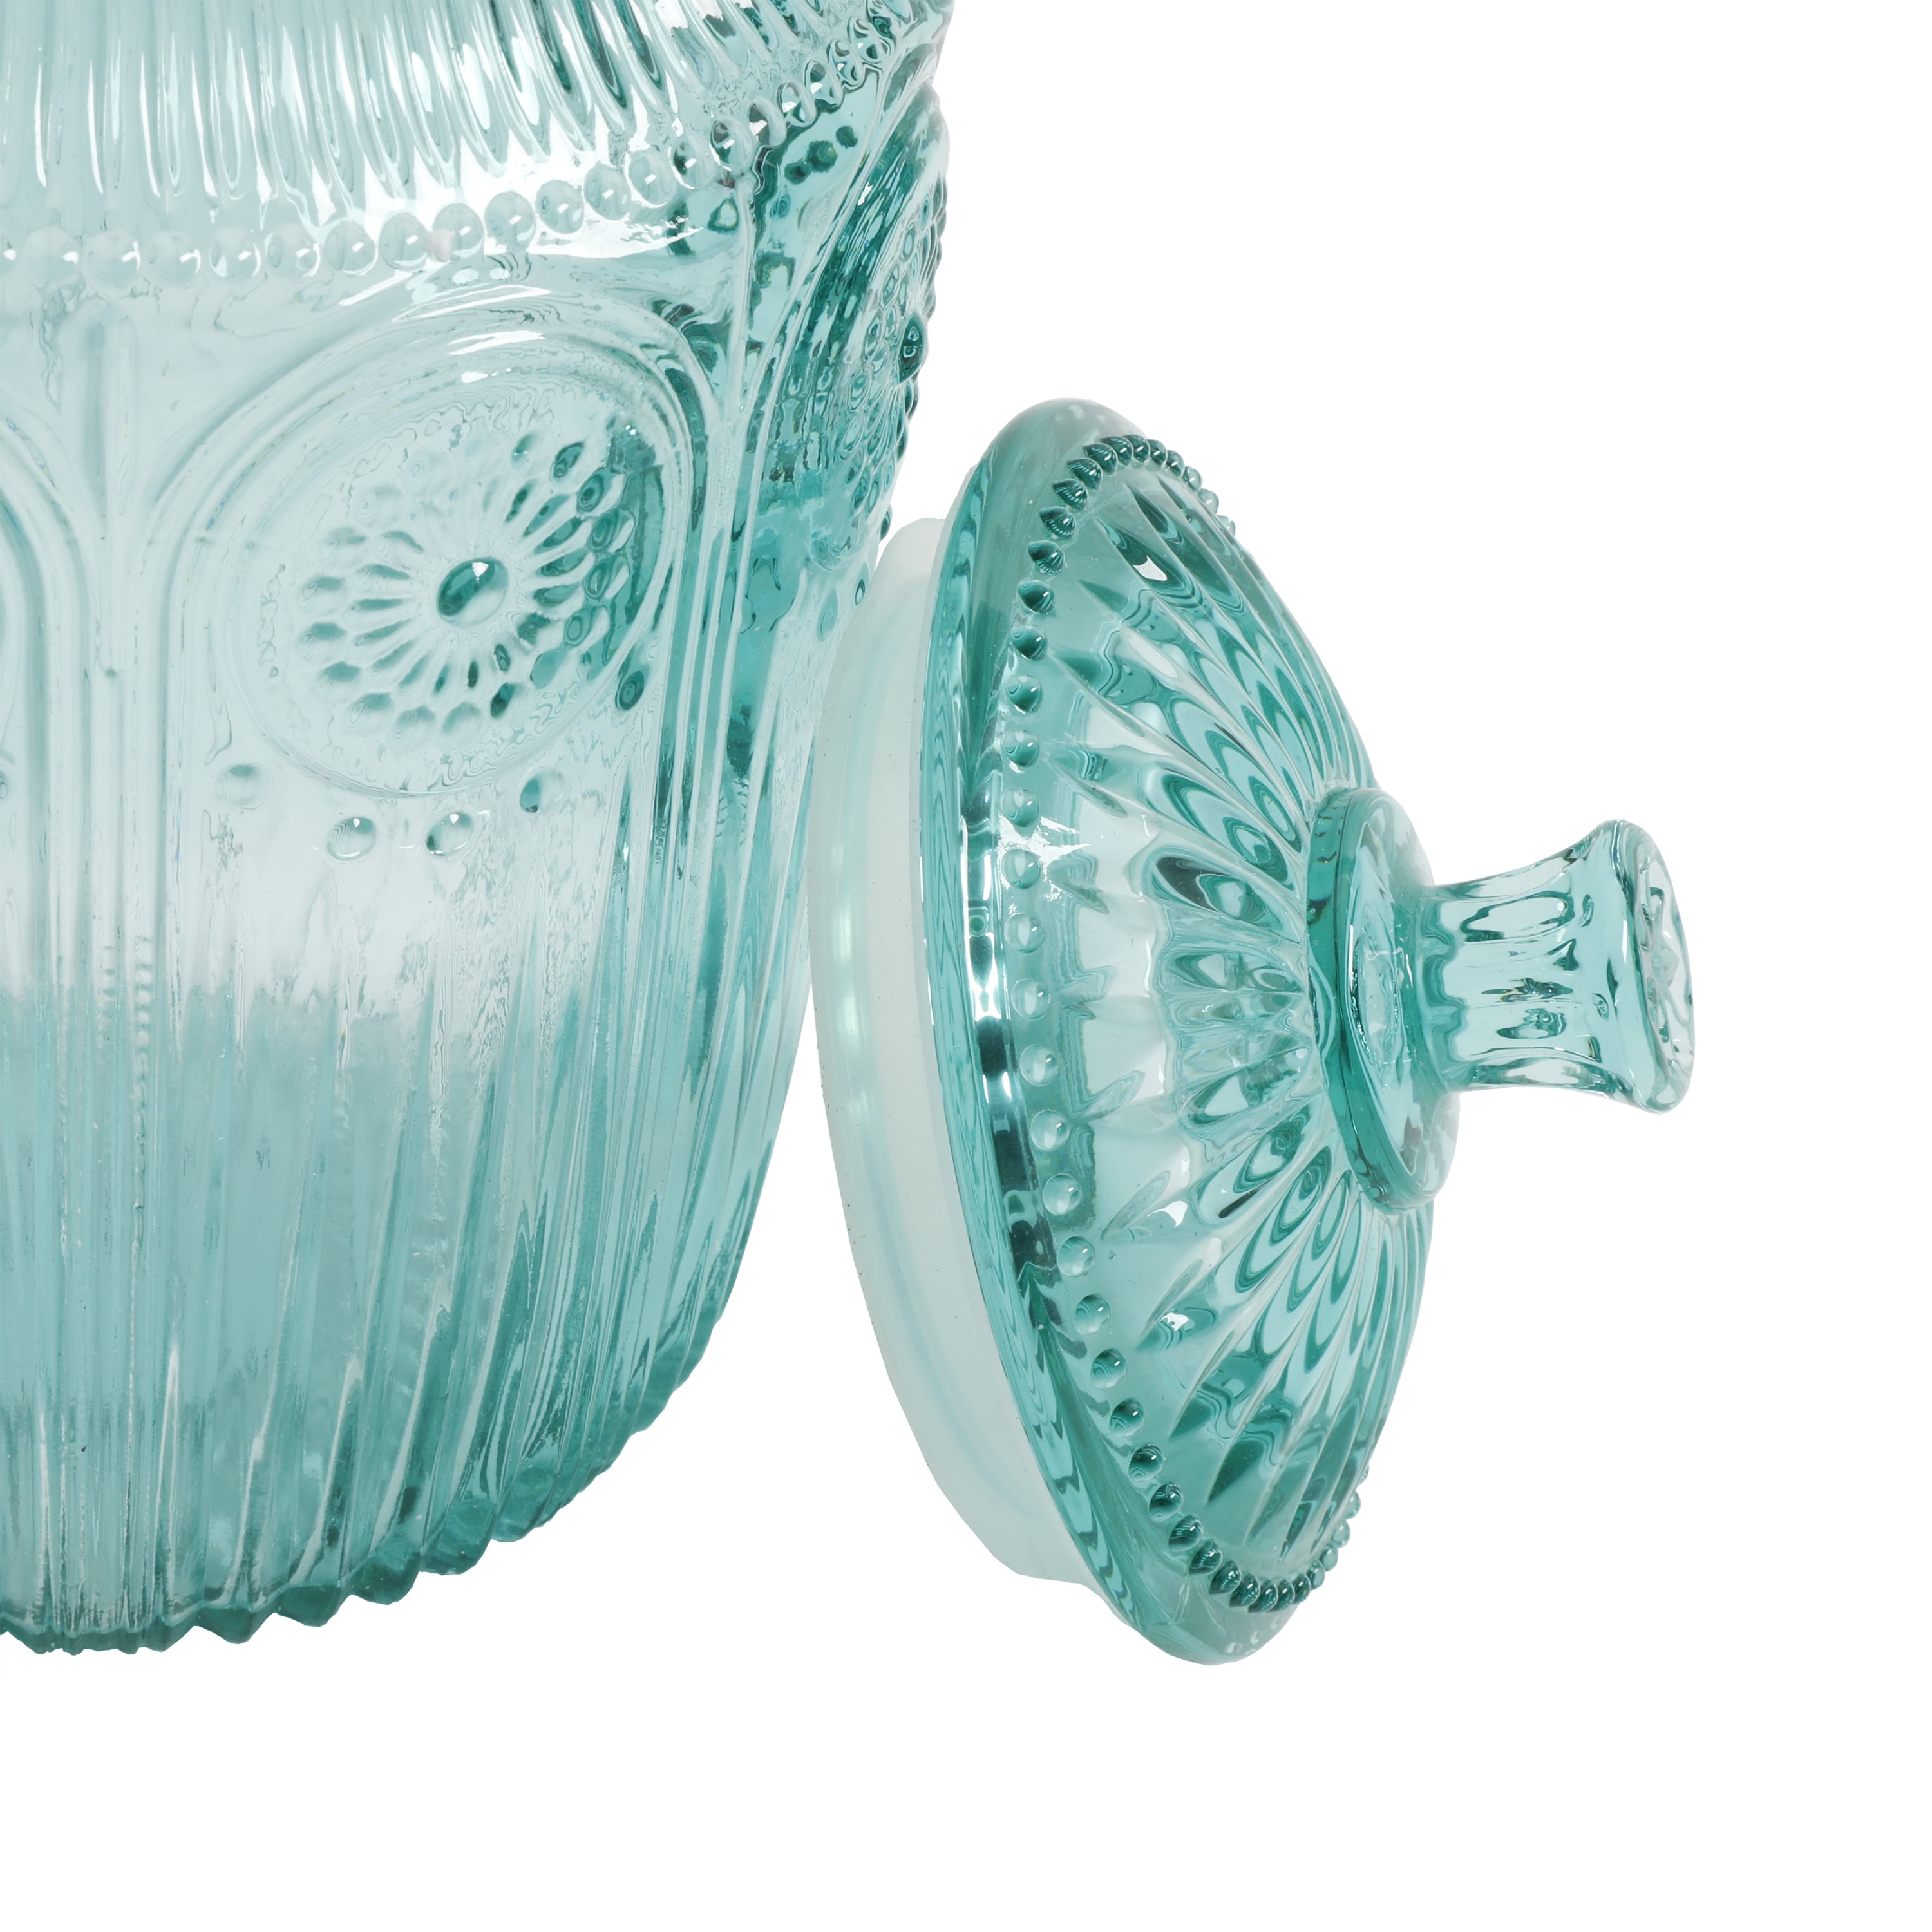 The Pioneer Woman Adeline Glass Cookie Jar, Turquoise